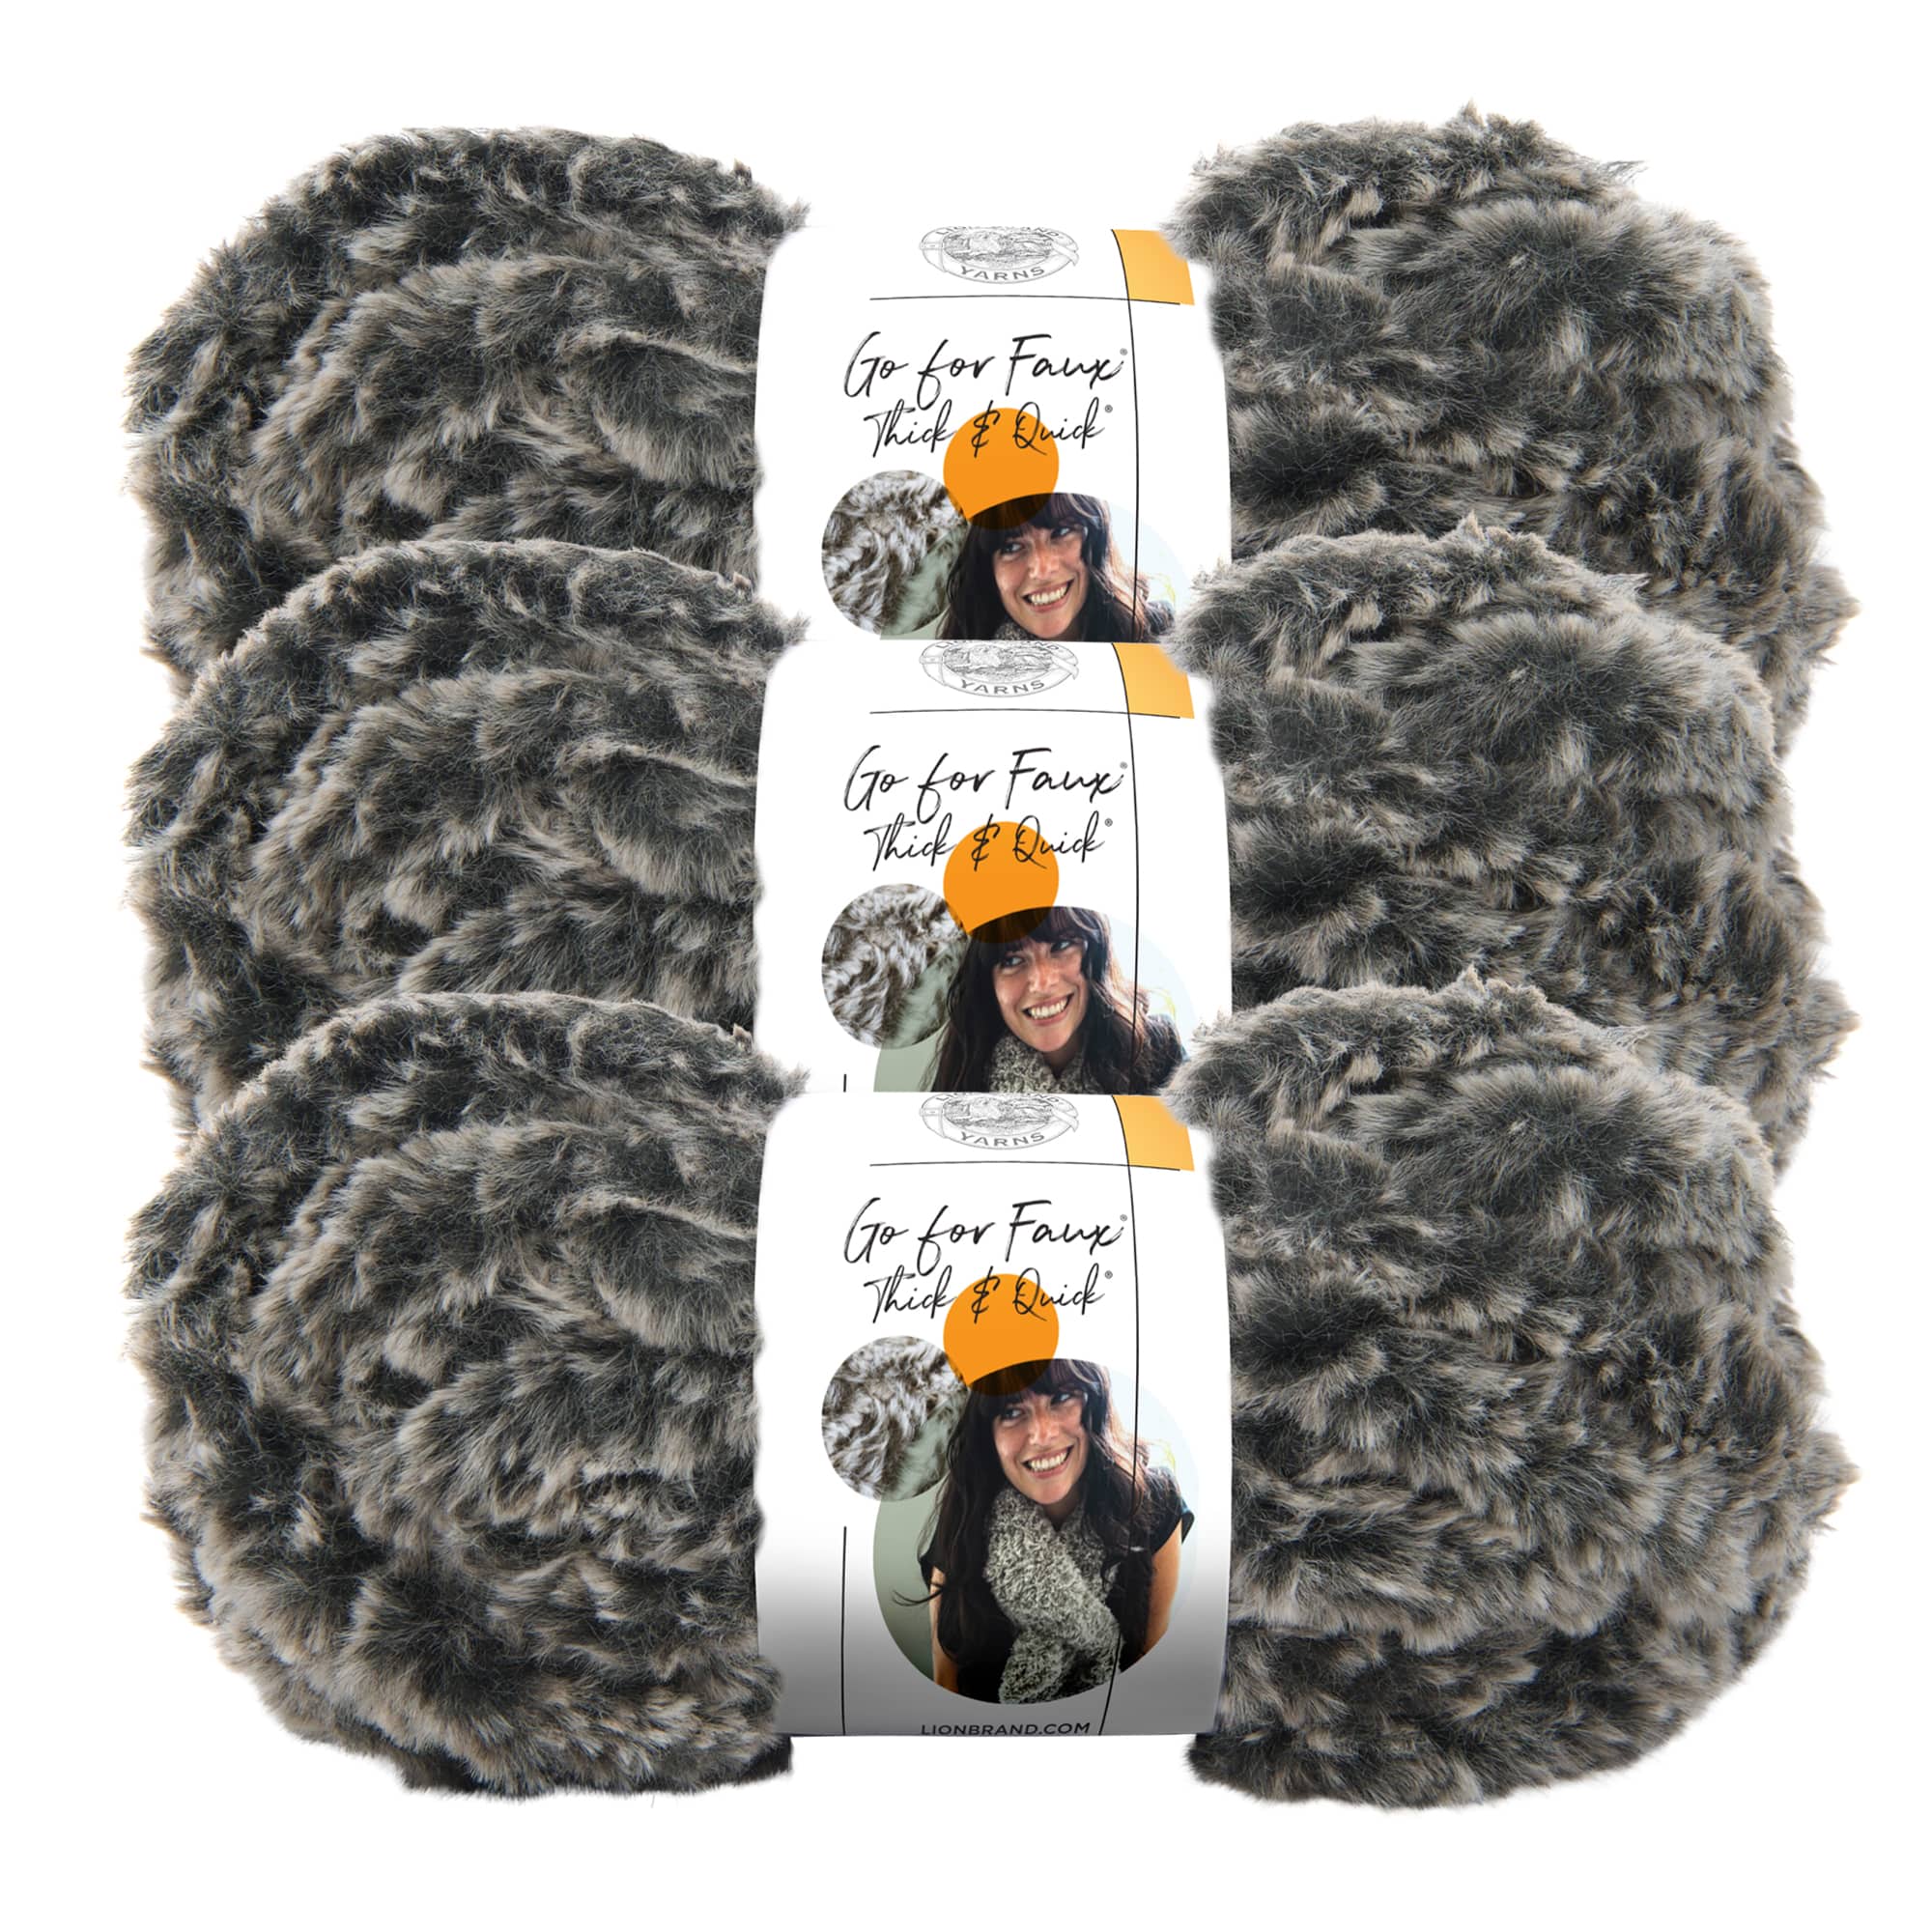 3 ct Lion Brand Go for Fleece Sherpa Yarn in Honey | 6.5 | Michaels